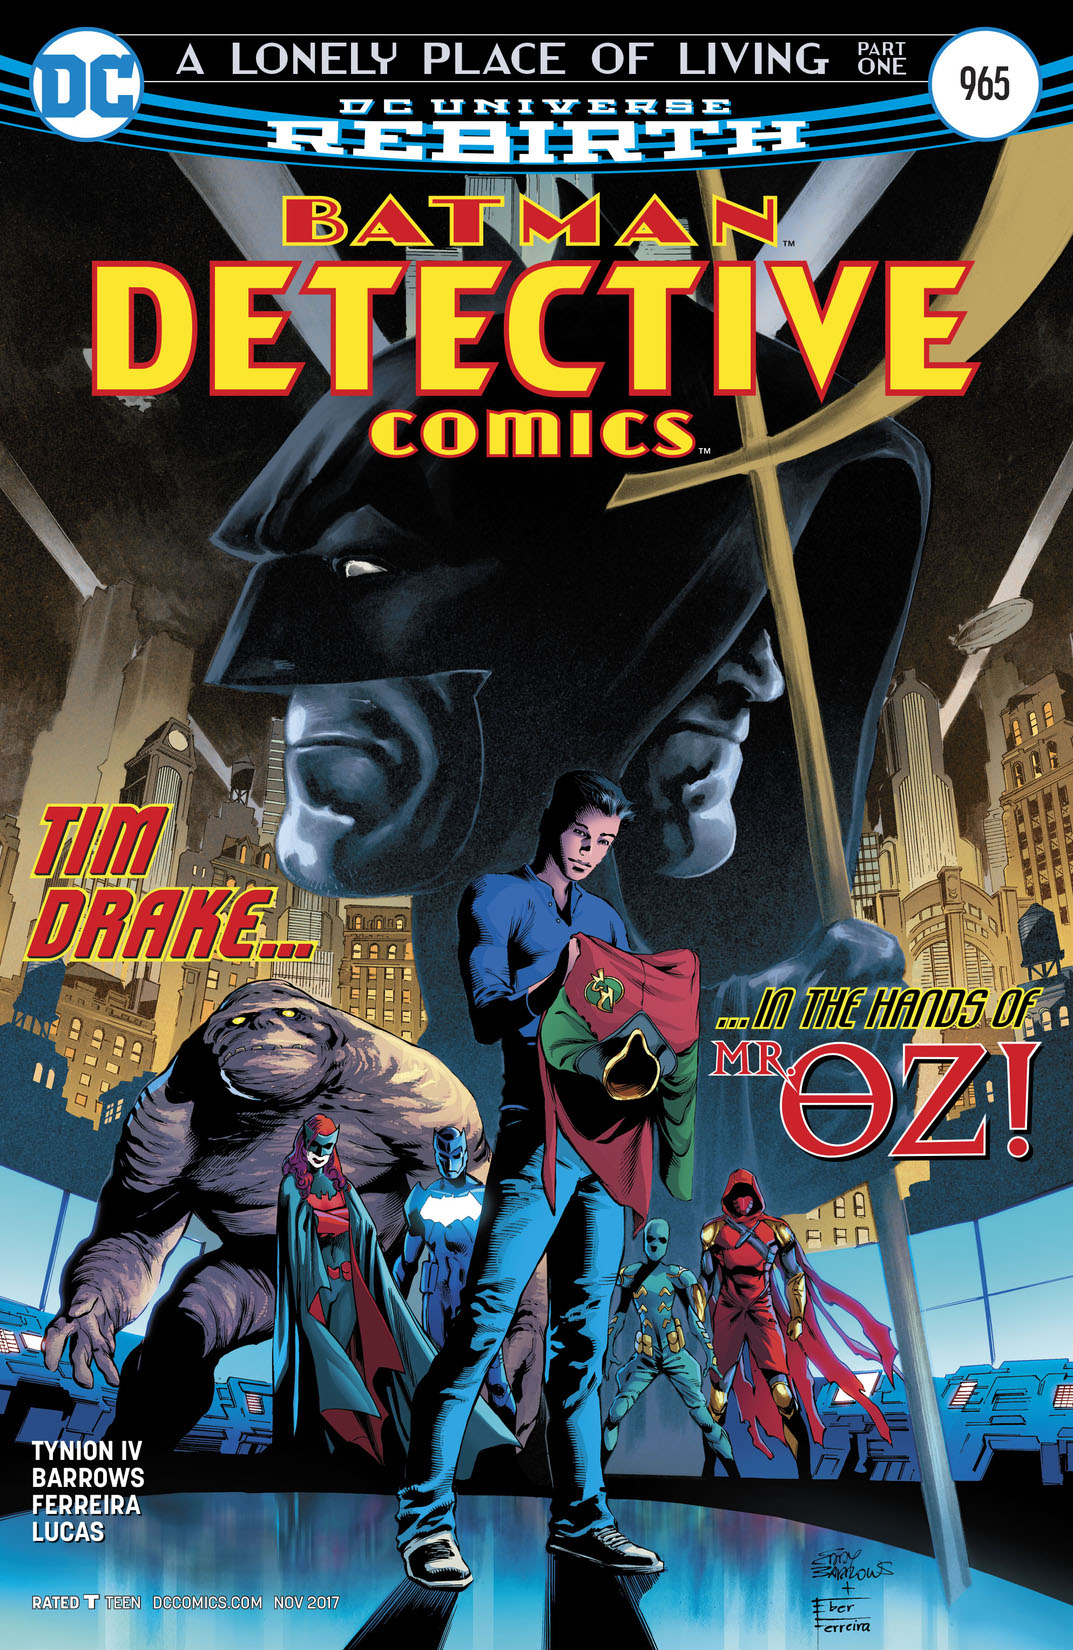 Detective Comics (2016-) #965 preview images